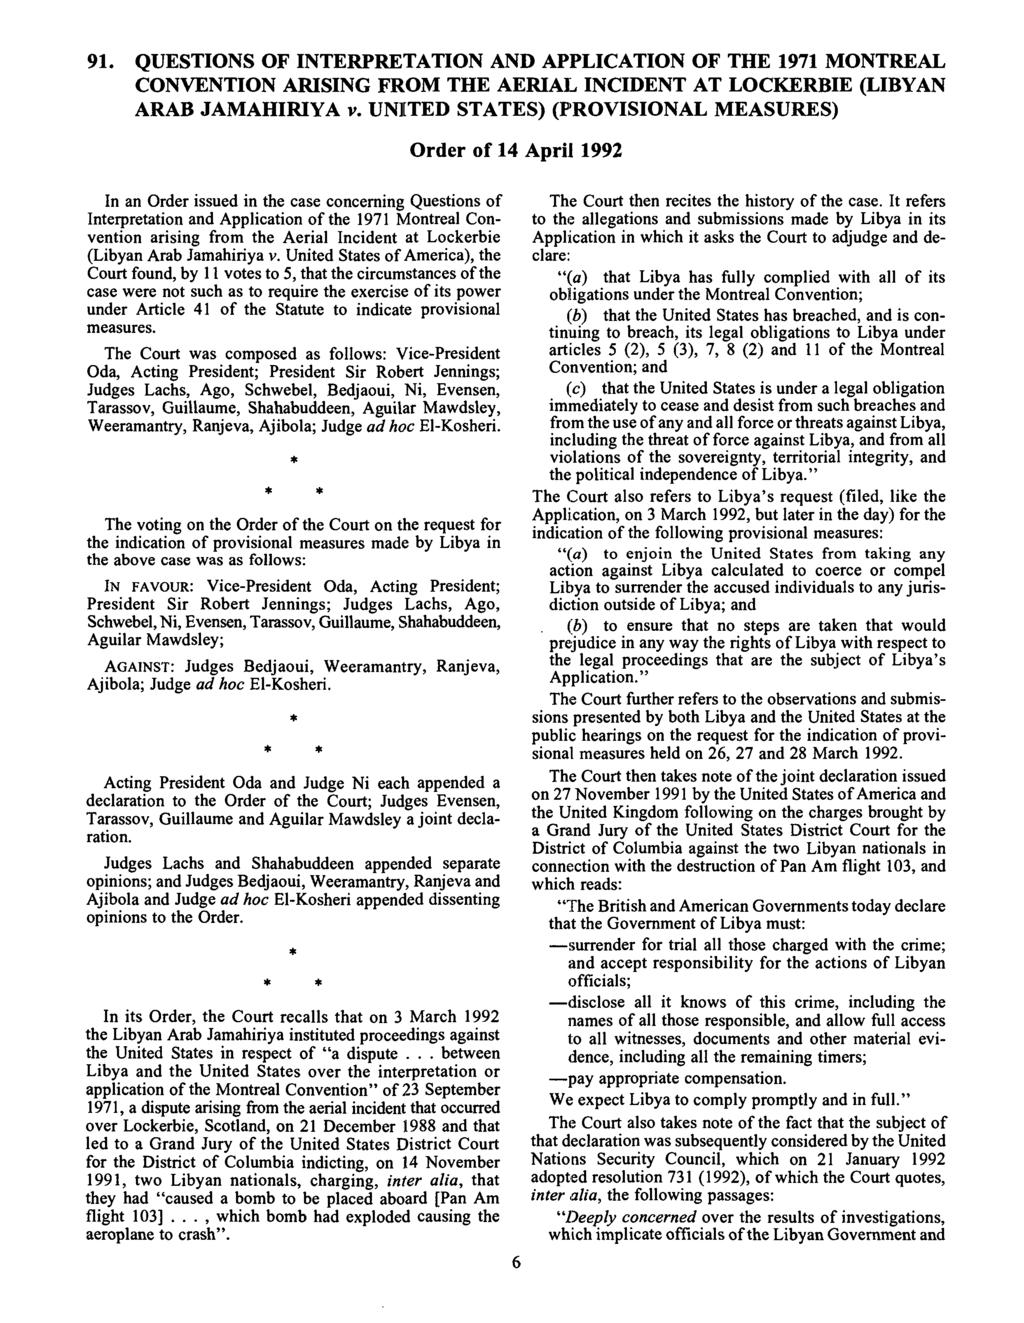 91. QUESTIONS OF INTERPRETATION AND APPLICATION OF THE 1971 MONTREAL CONVENTION ARISING FROM THE AERIAL INCIDENT AT LOCKERBIE (LIBYAN ARAB JAMAHIRIYA v.